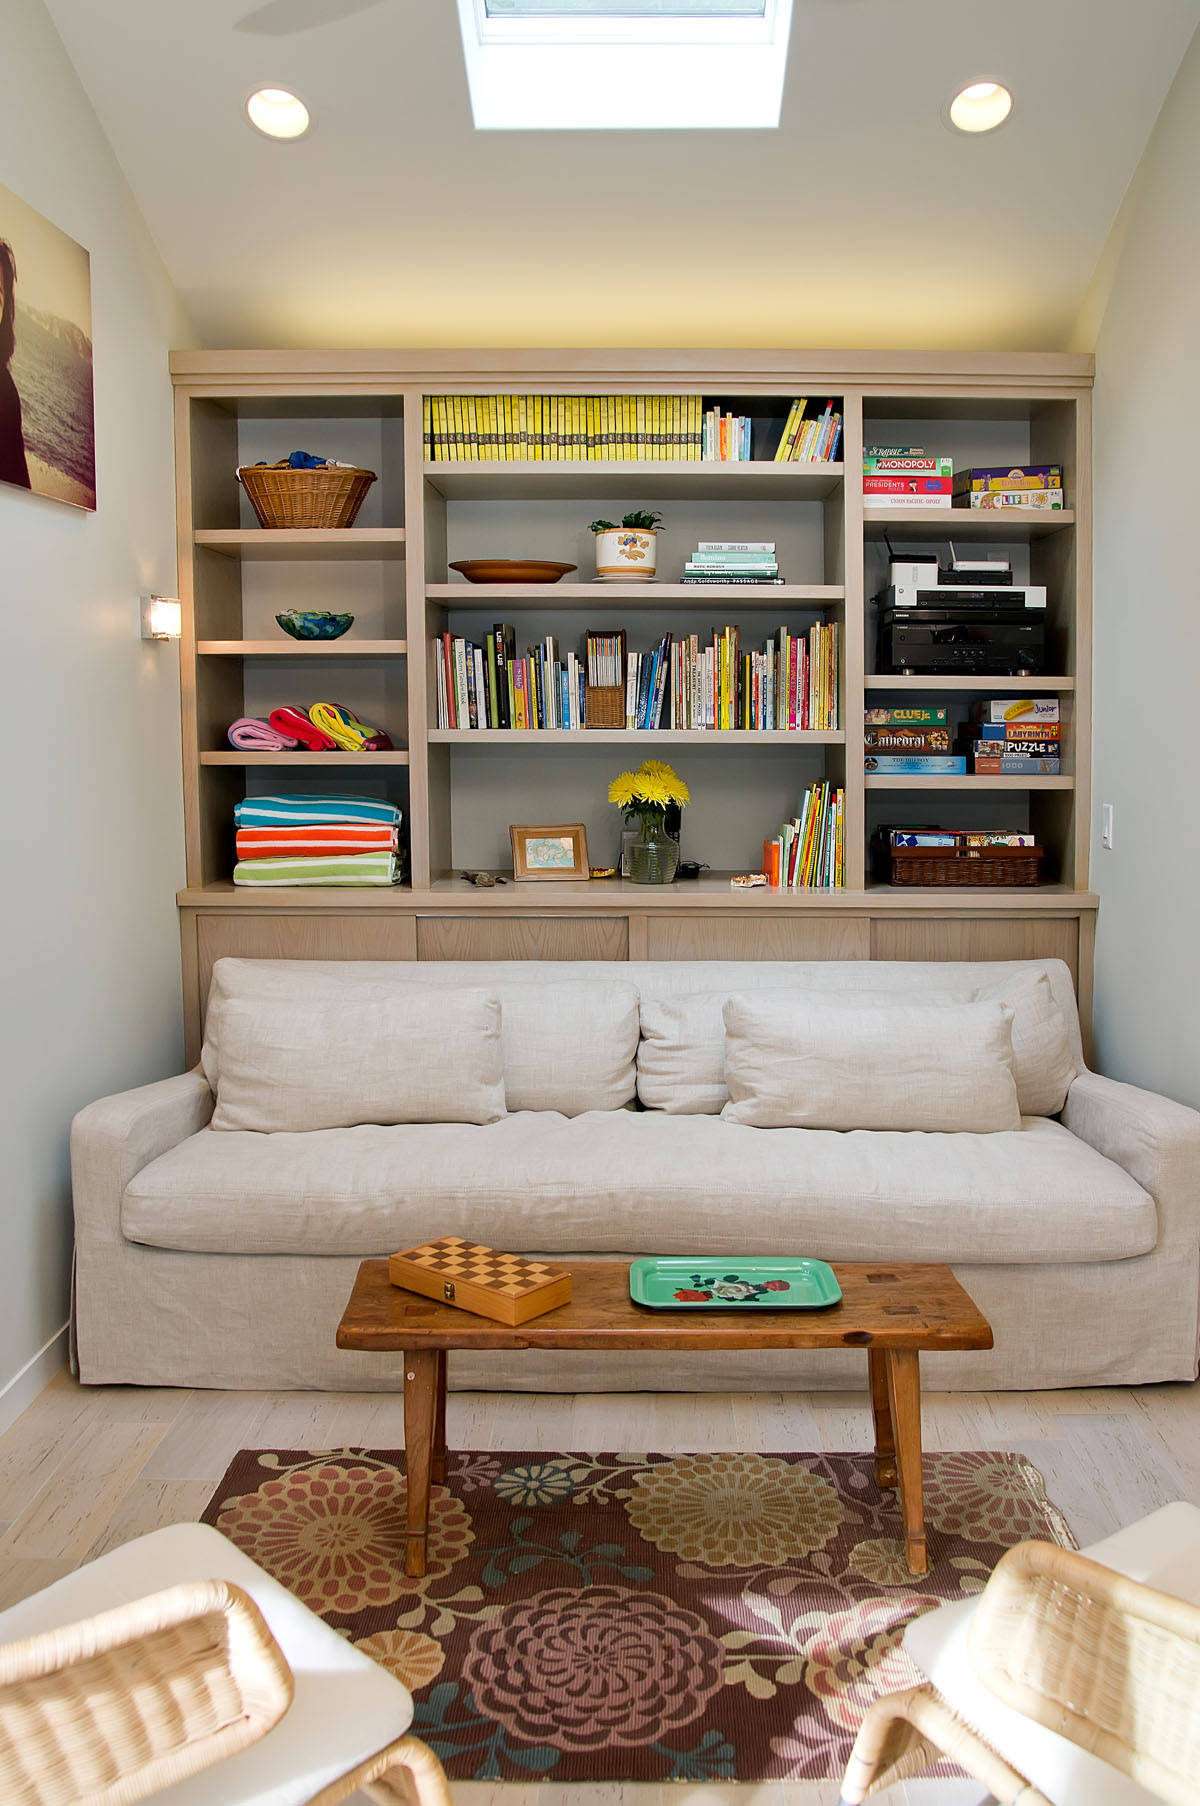 Bookshelf Behind Sofa - Photos & Ideas | Houzz